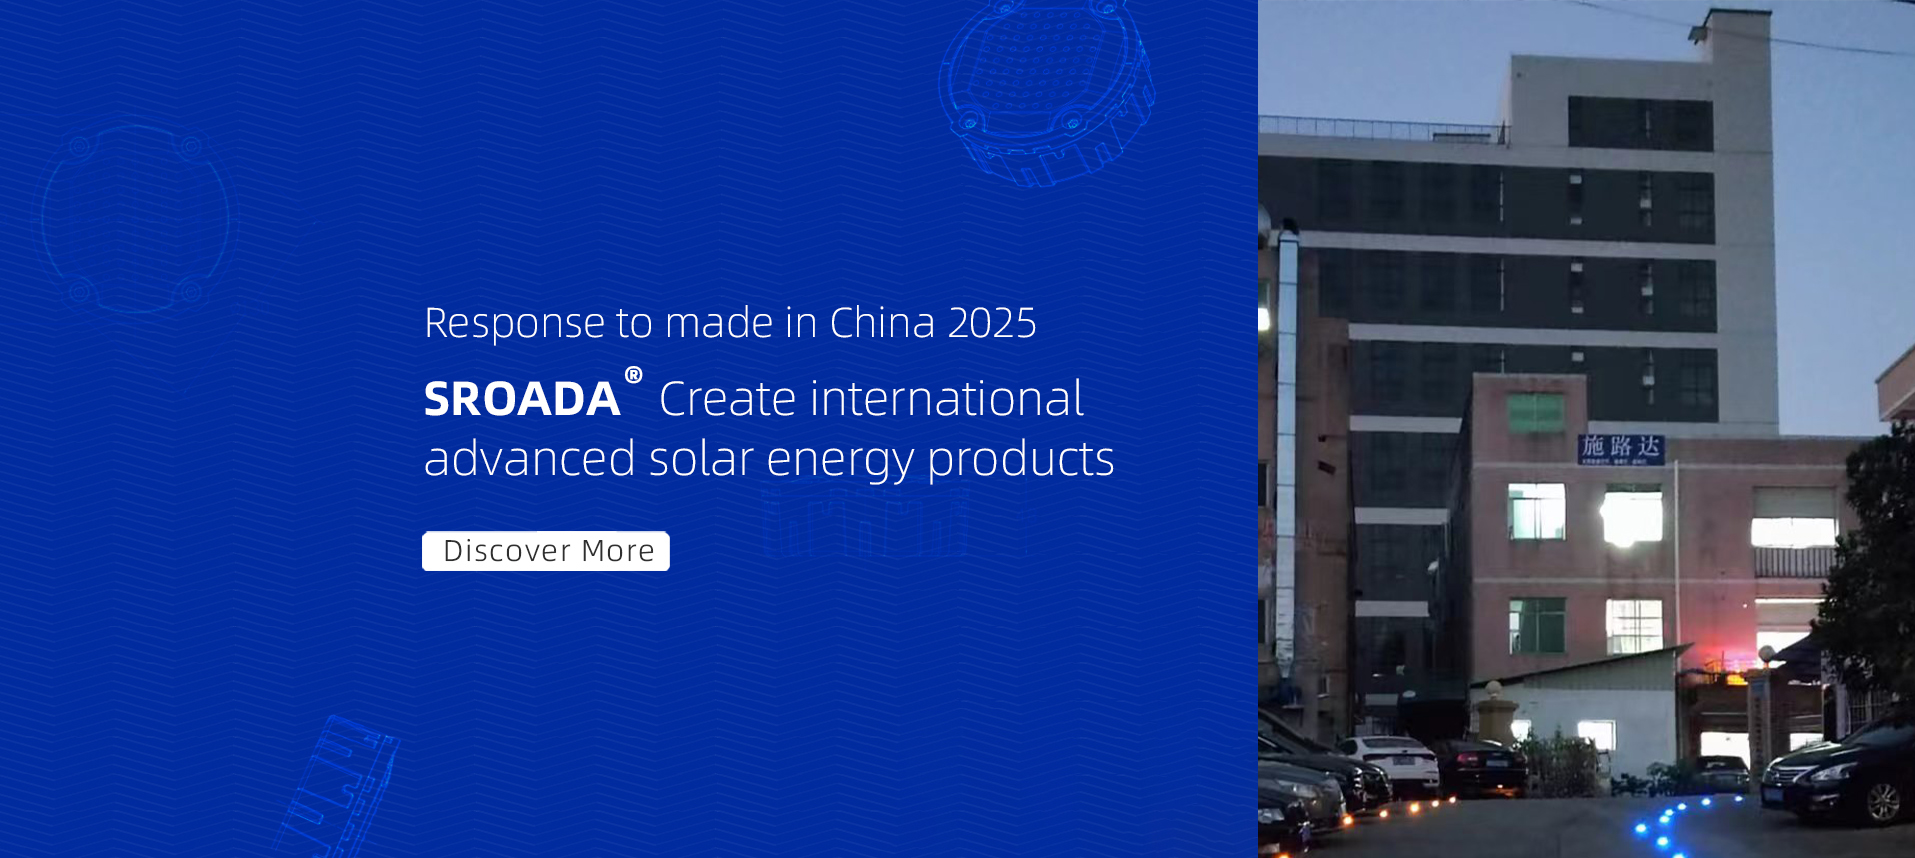 Response to made in China 2025SROADA Create internationaladvanced solar energy products